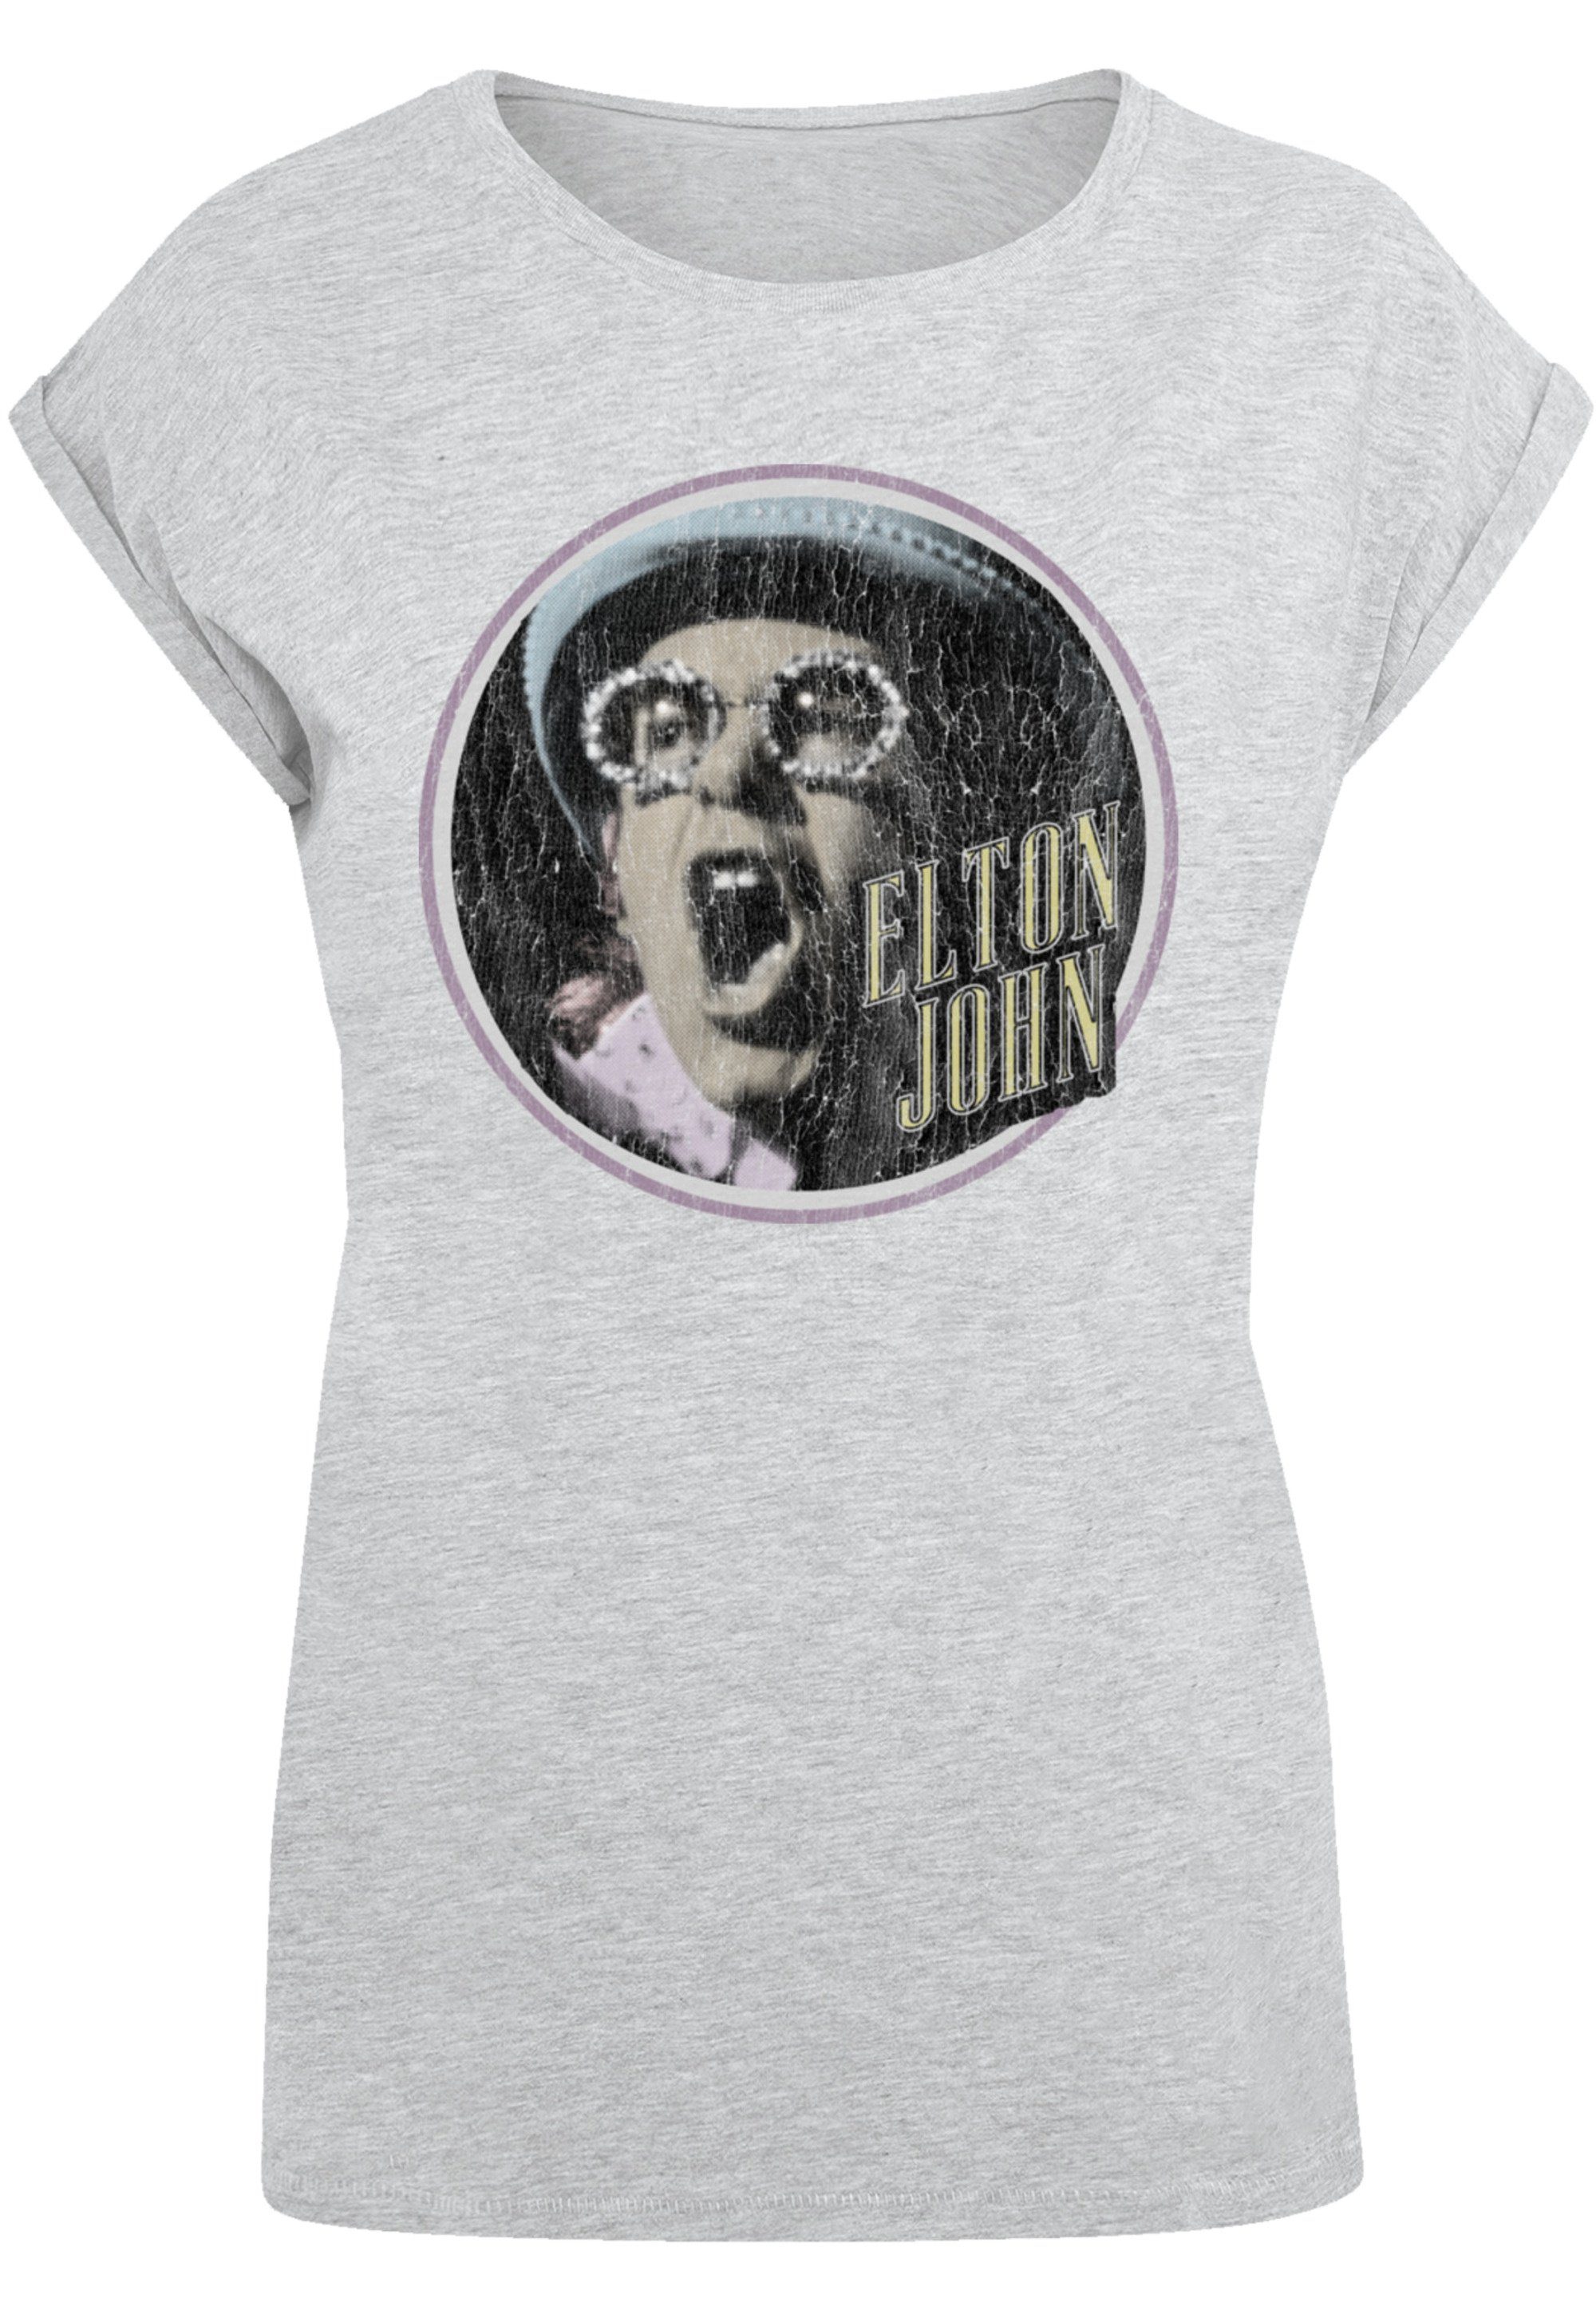 T-Shirt Premium Circle John Qualität F4NT4STIC Elton heather Vintage grey